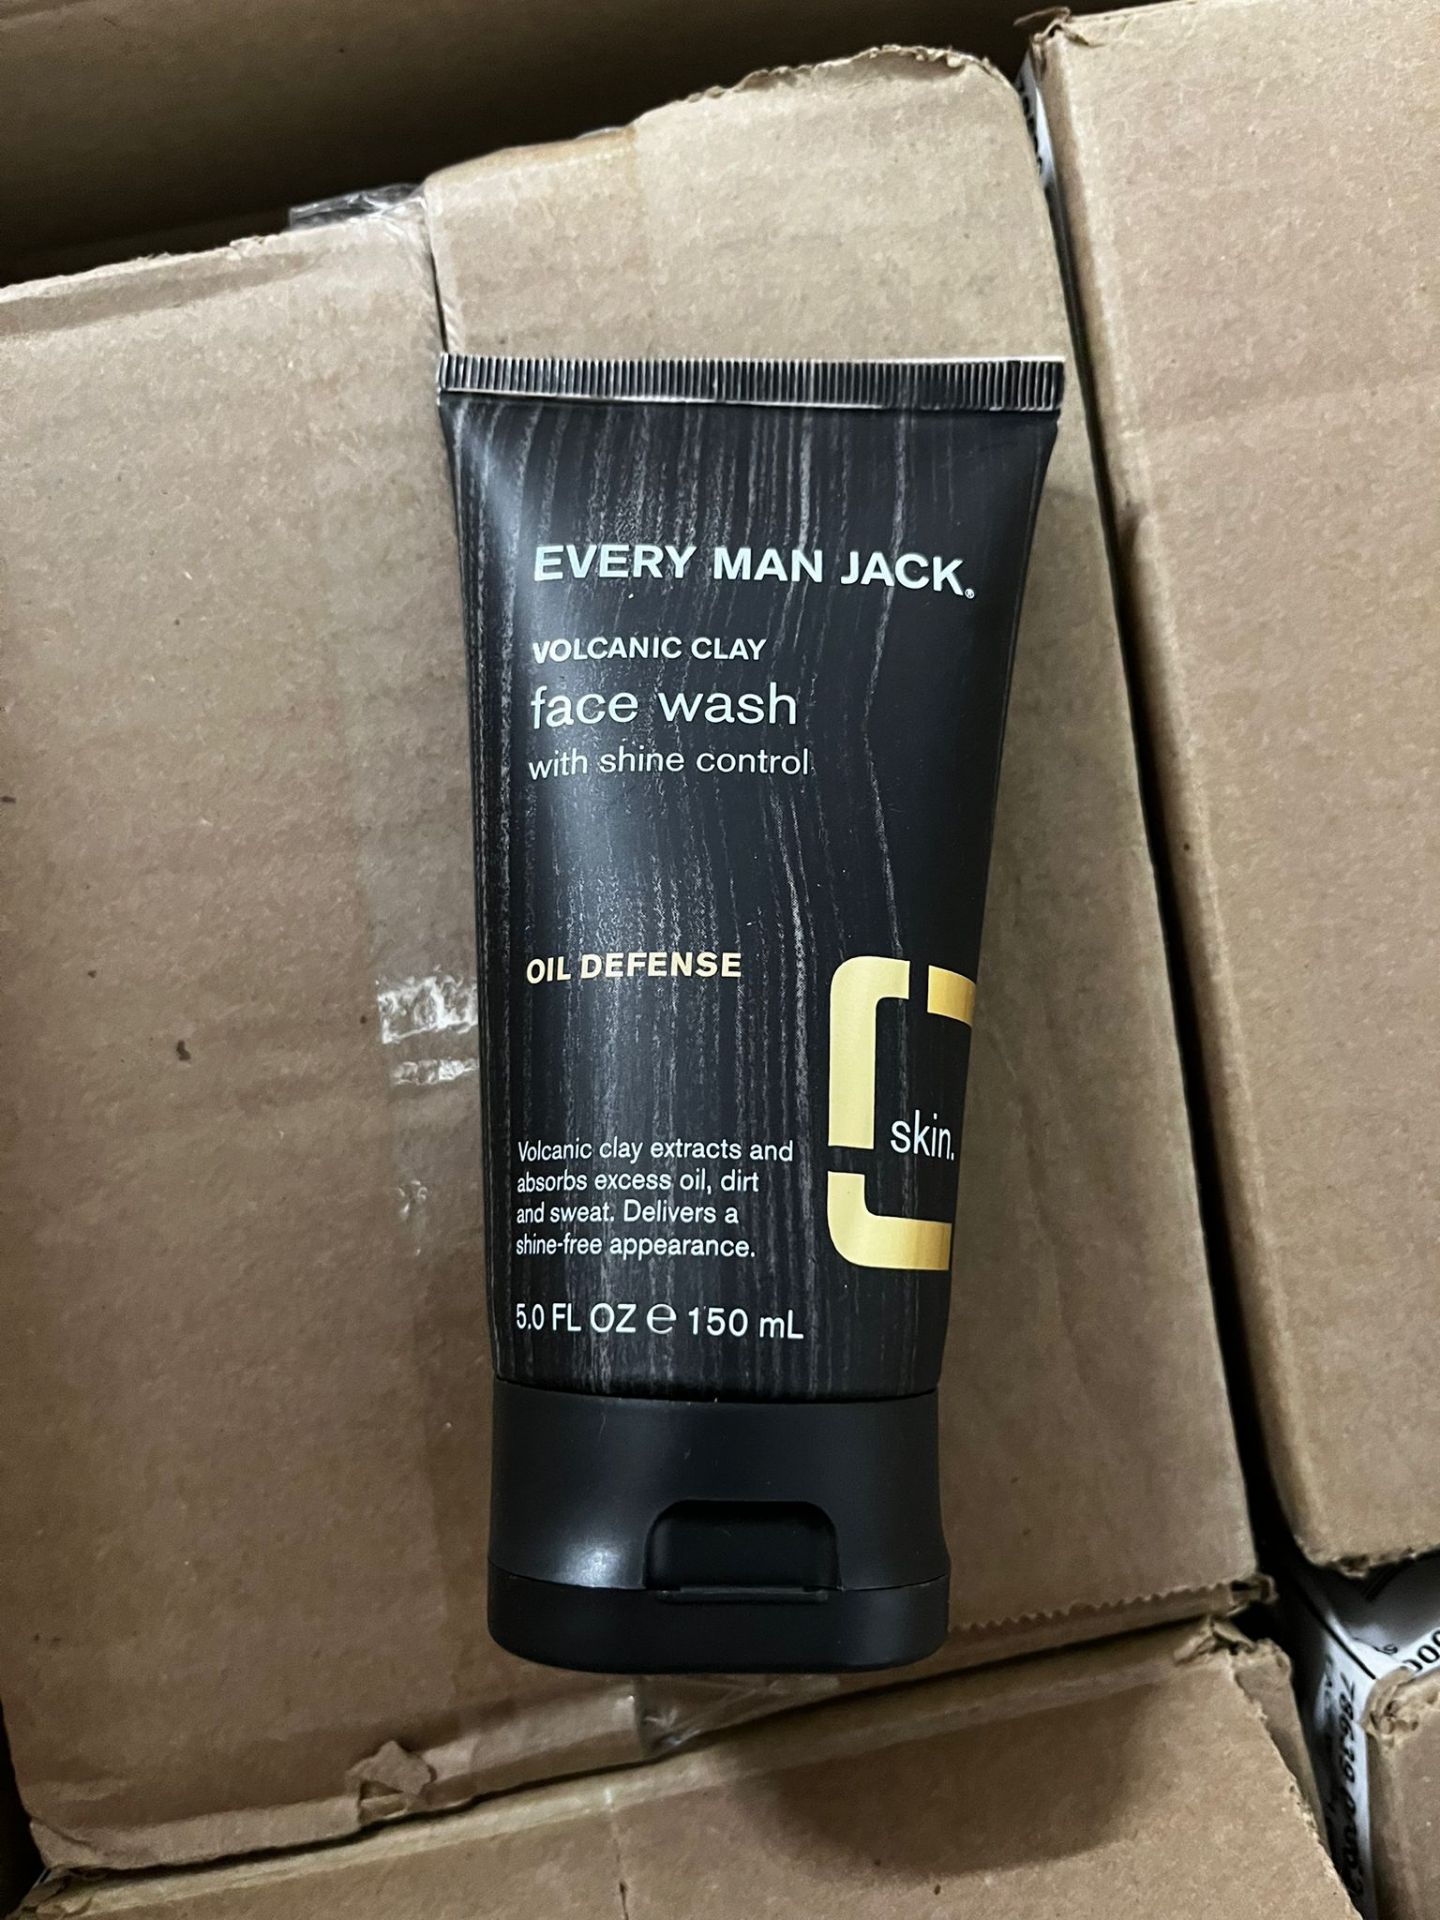 Every Man Jack Face Wash x 96, Est Retail Value £1150